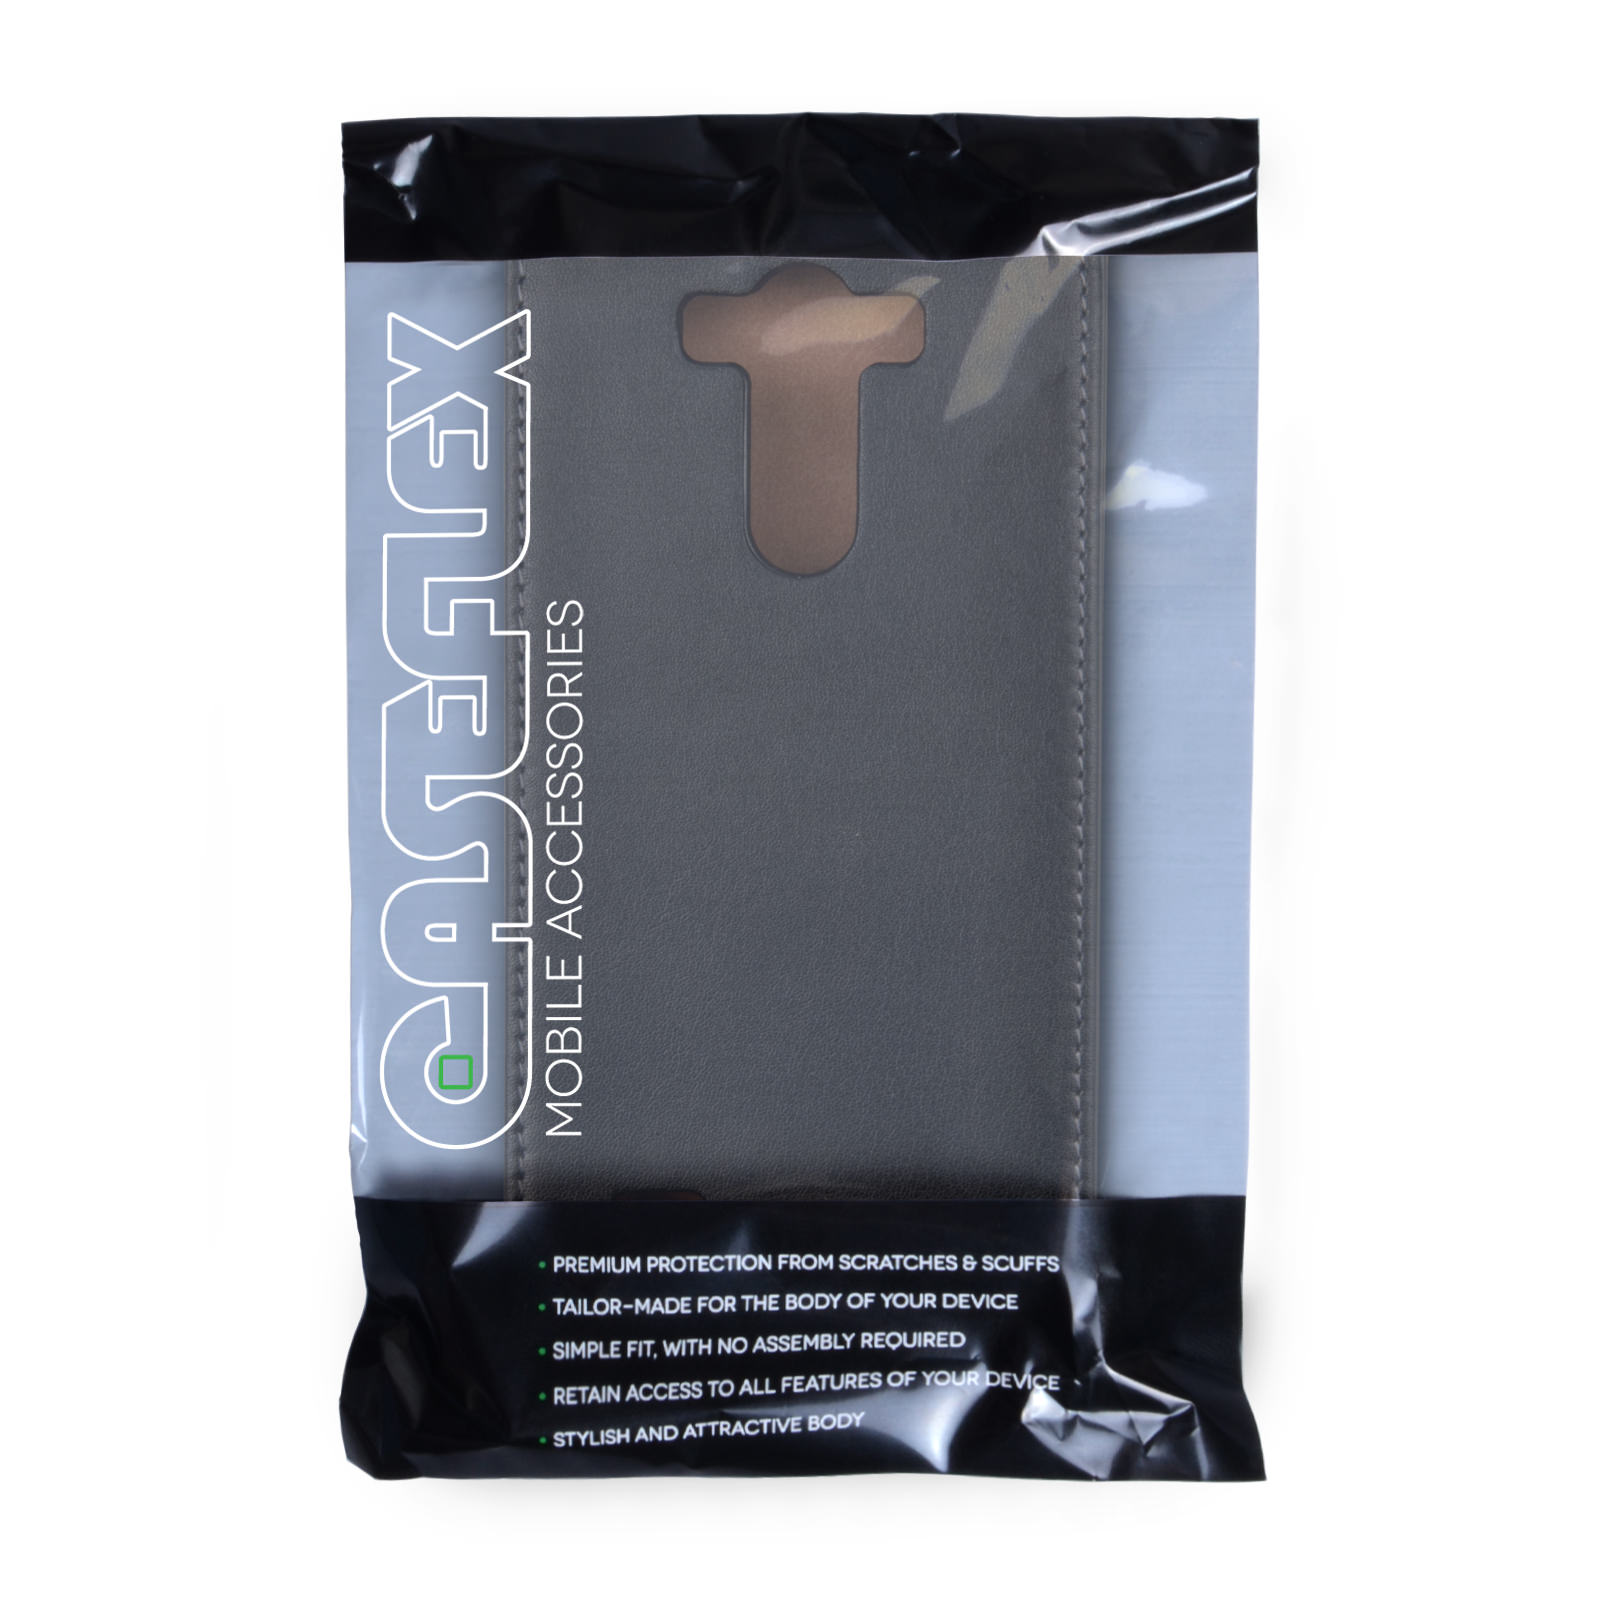 Caseflex LG G3 Real Leather Flip Case - Black